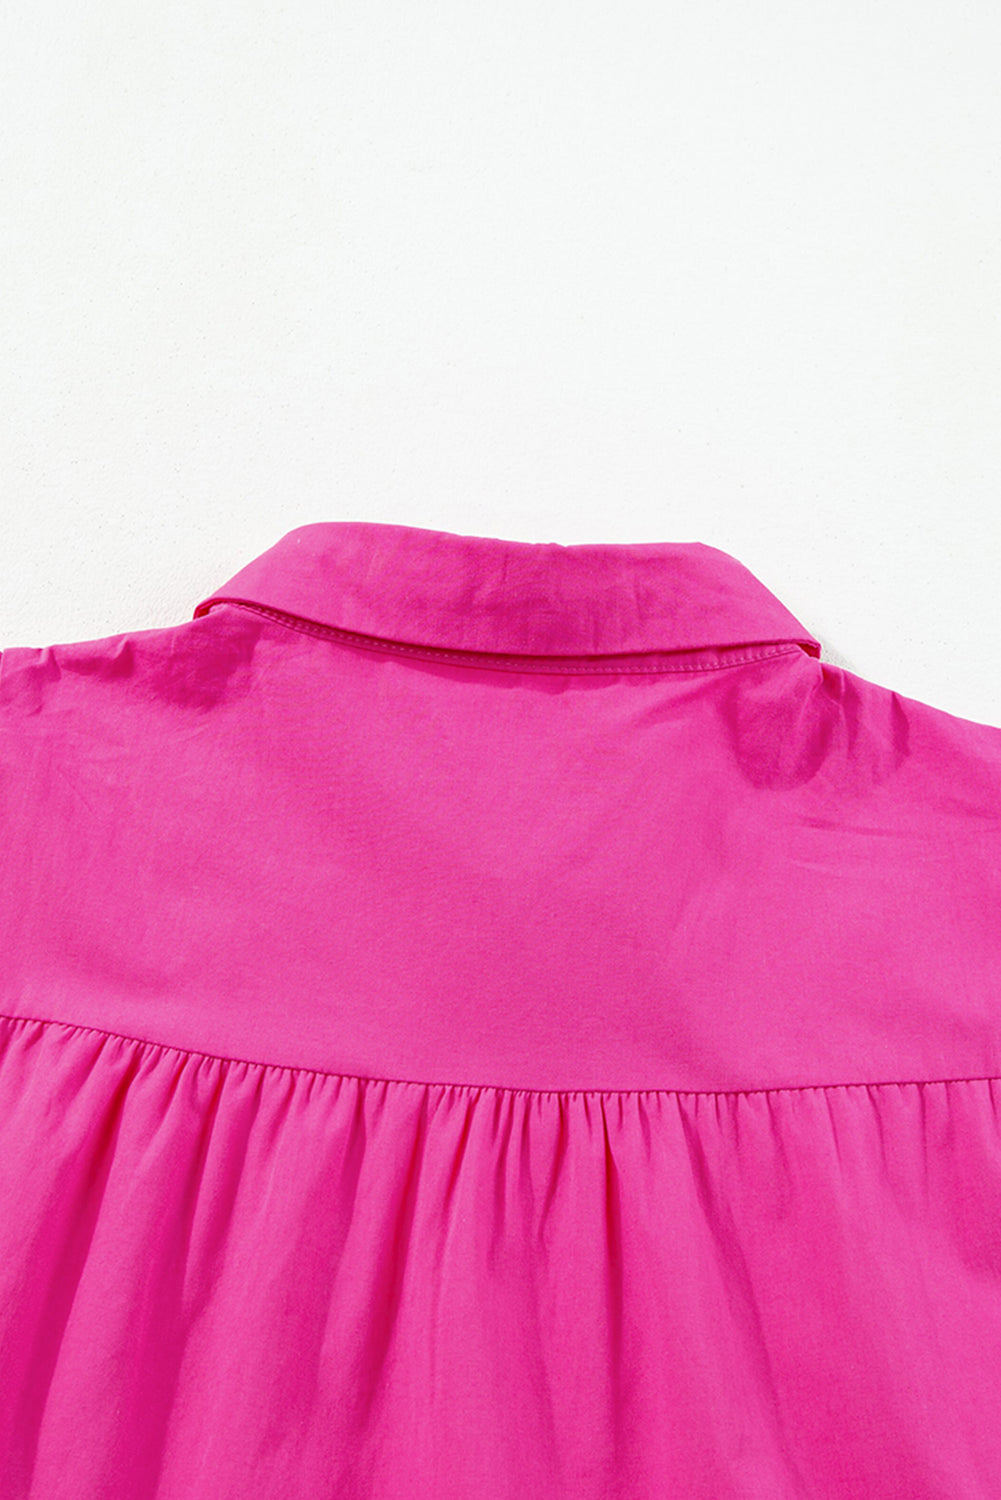 Vintage Charm: Ric-Rac Detailing Rose Red Puff Sleeve Shirt Dress